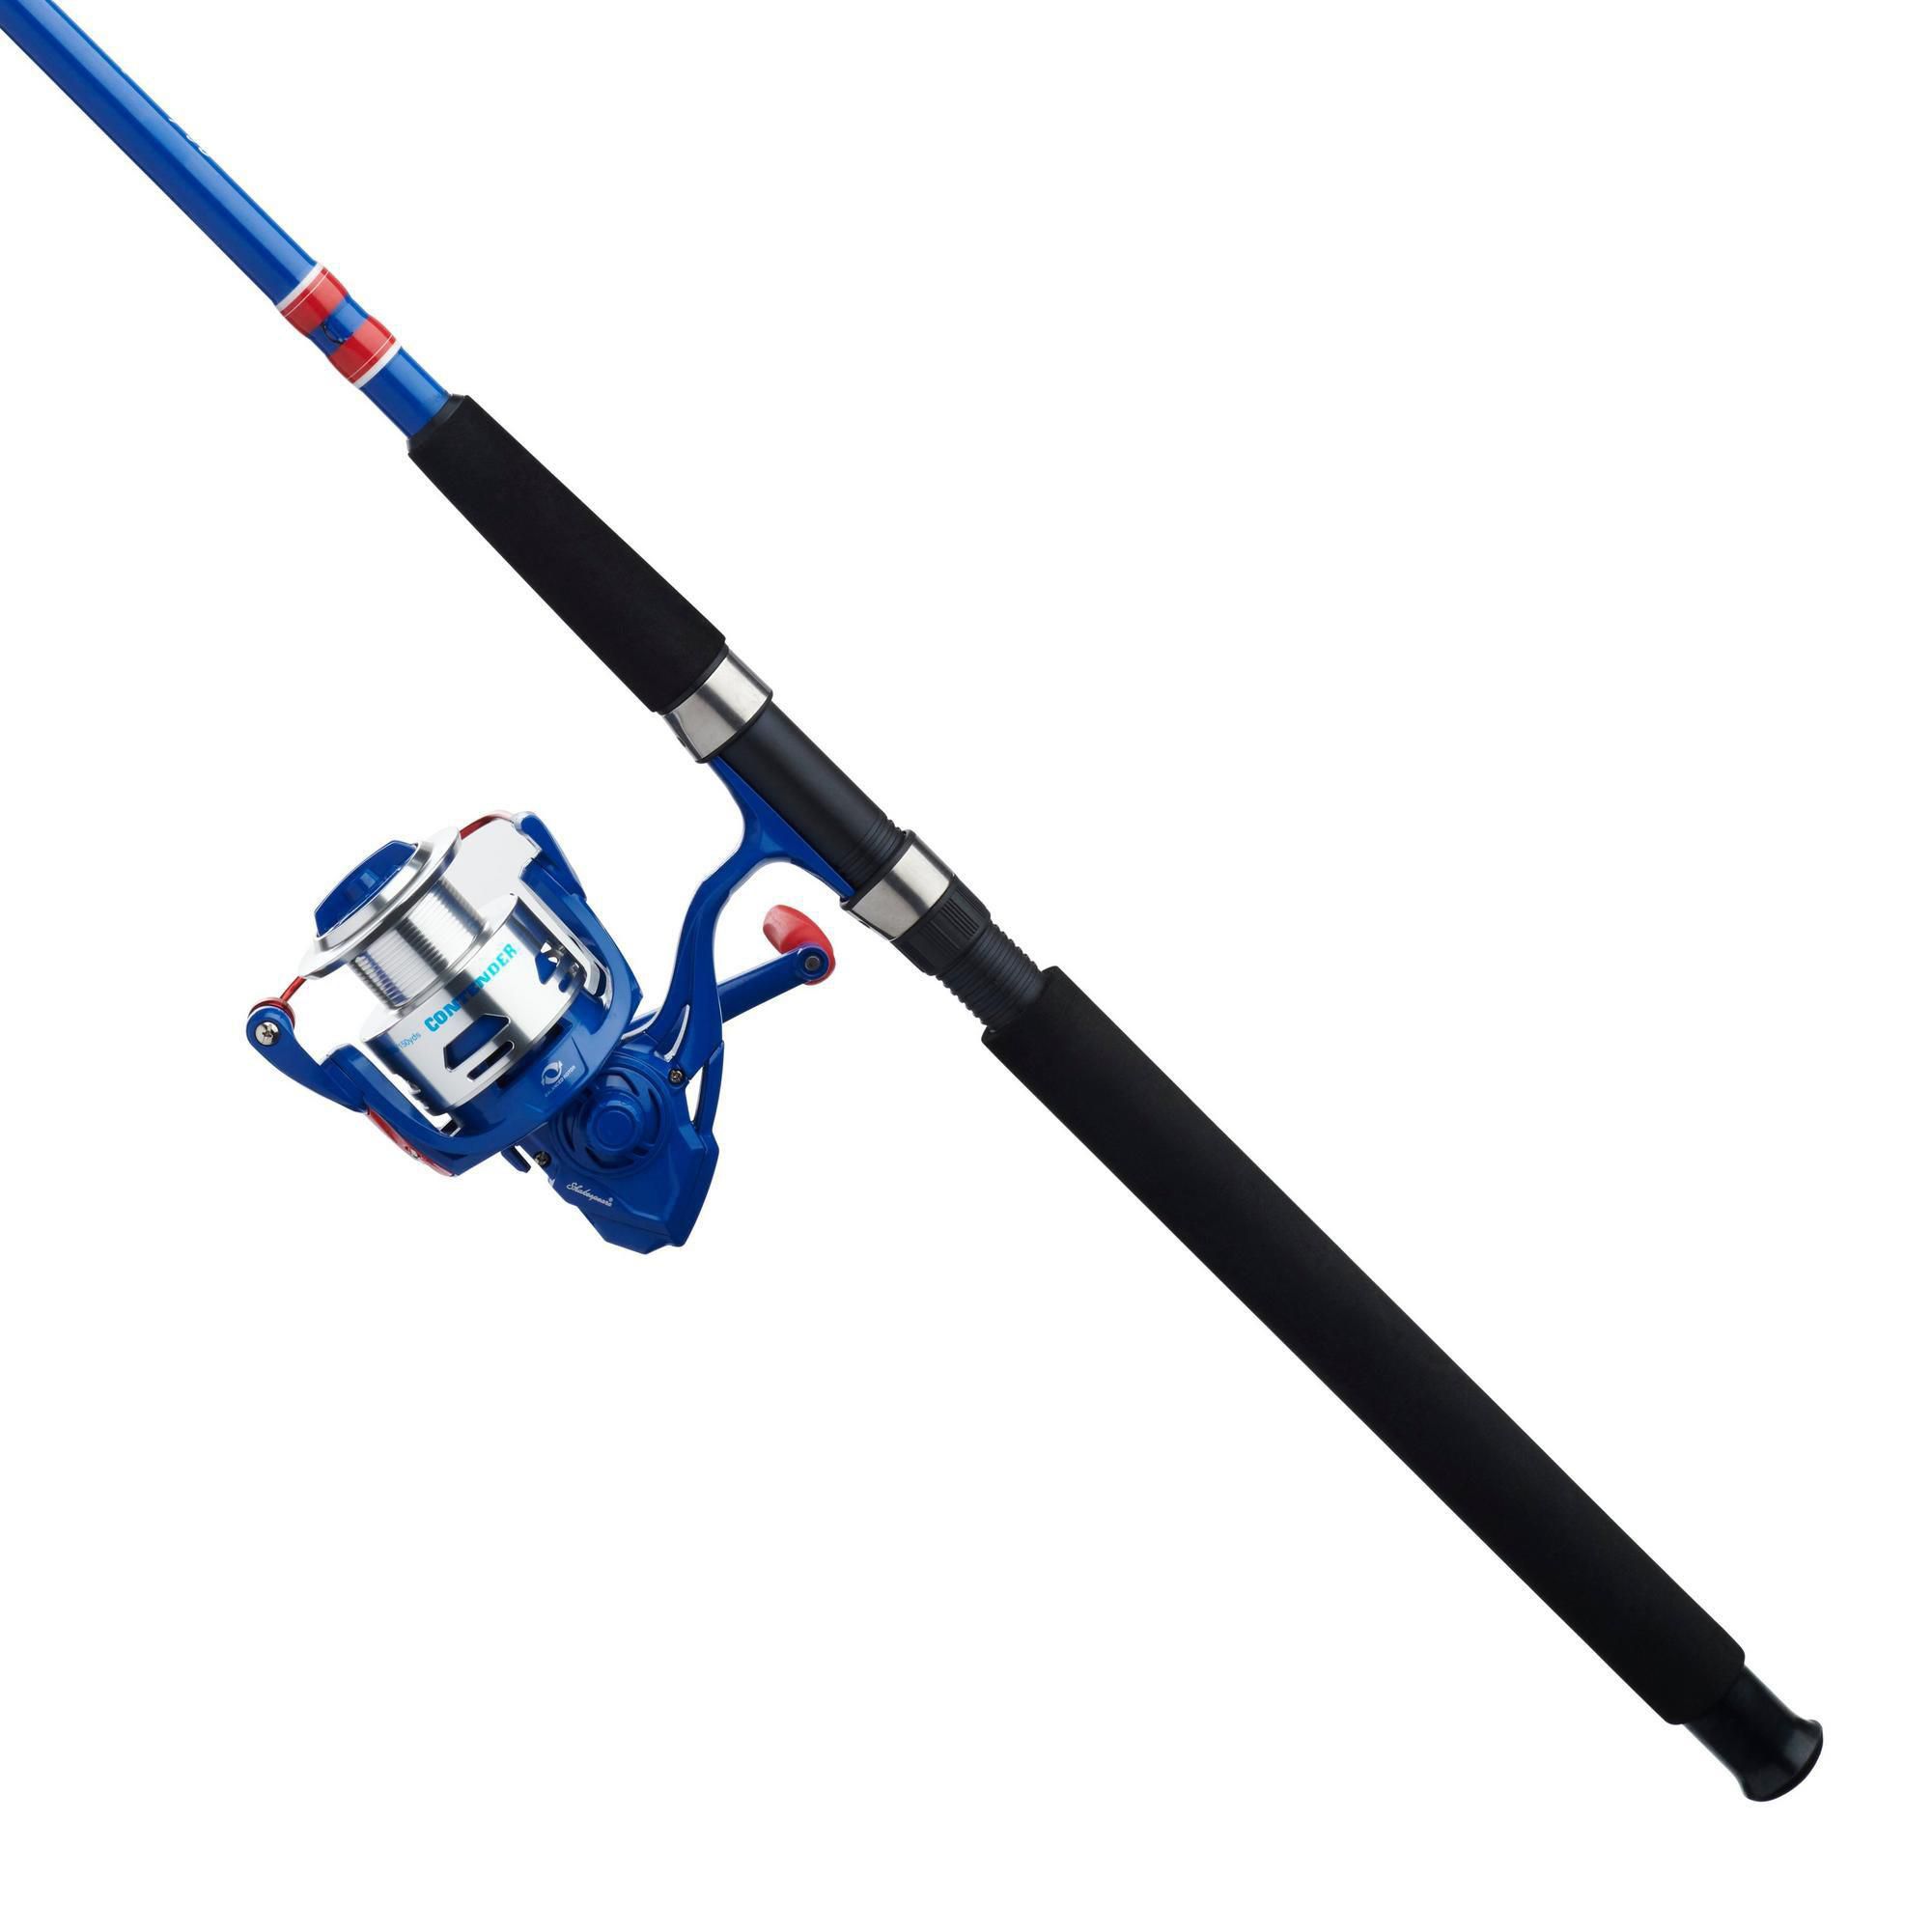 Fingerhut - Abu Garcia Max X Baitcast RH/LH 6'6 Fishing Rod and Reel Combo